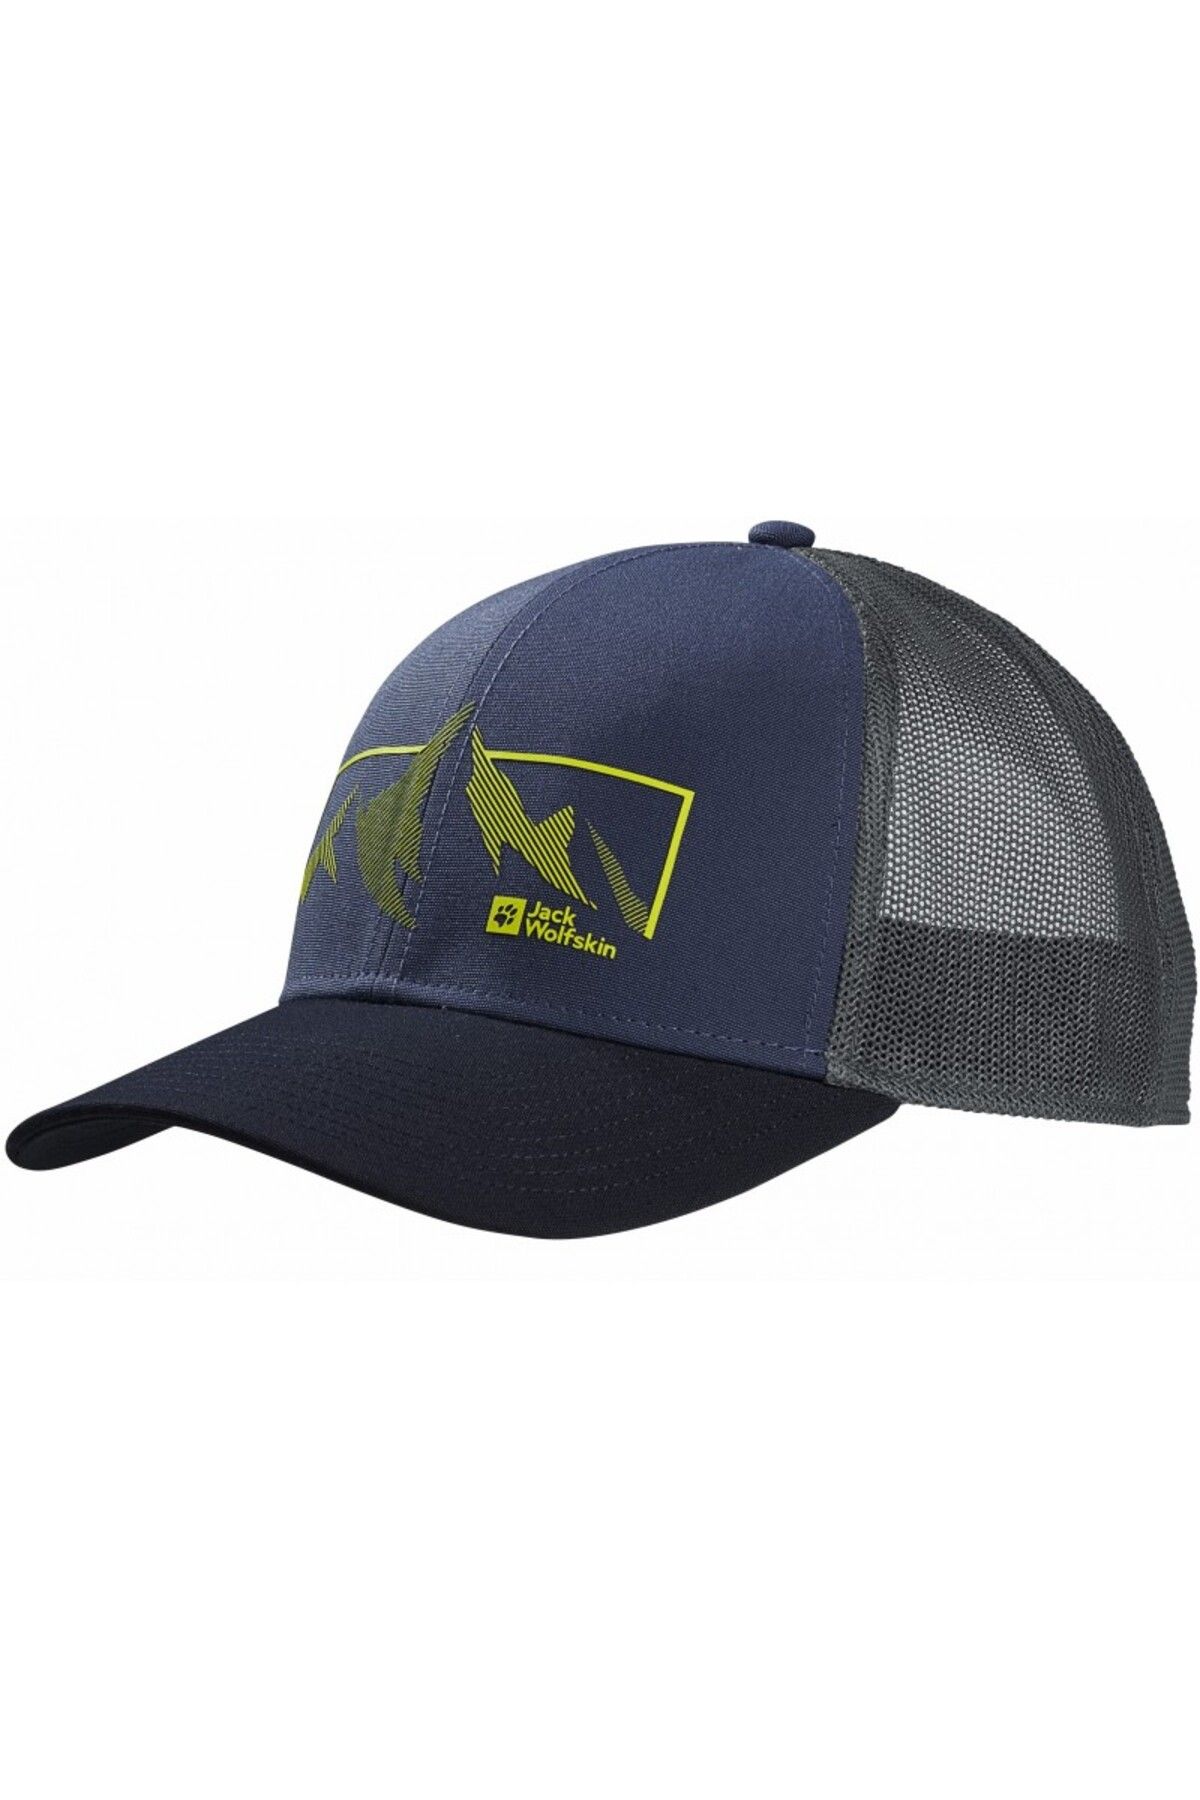 Jack Wolfskin Brand Şapka